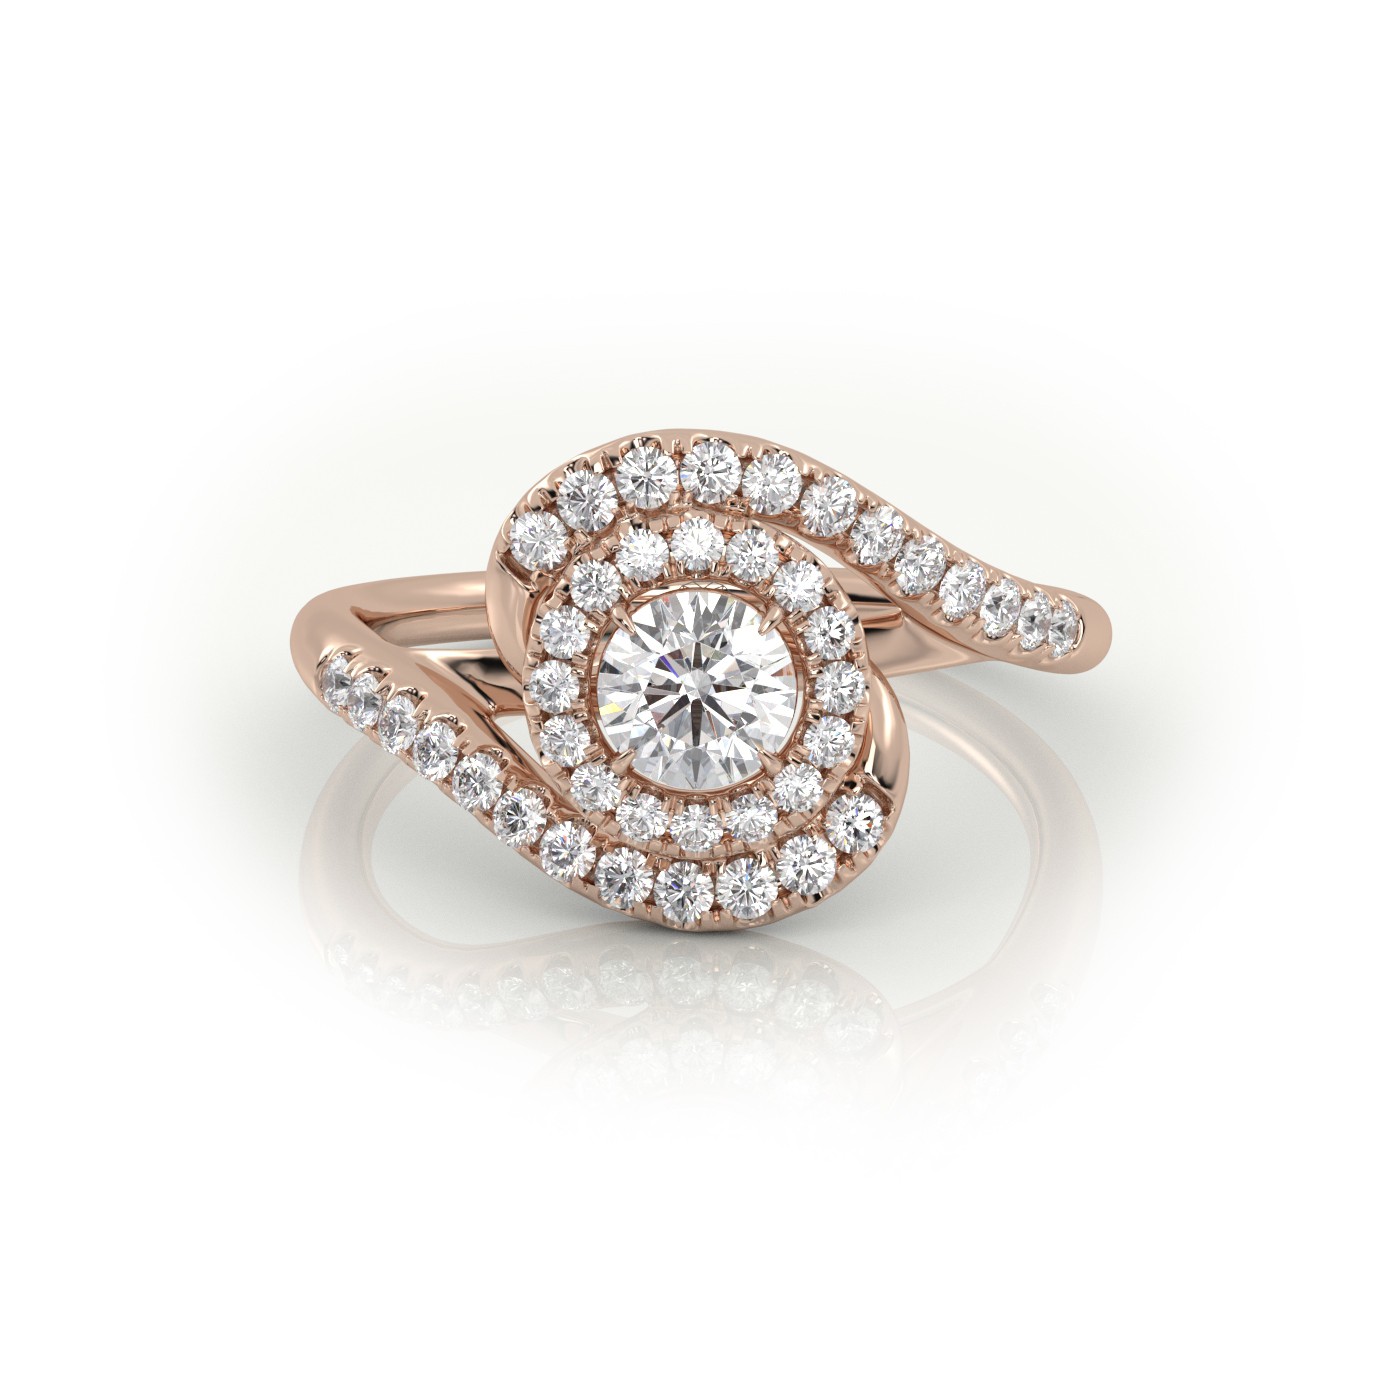 18K ROSE GOLD ROUND CUT TWISTED DESIGNER DIAMOND ENGAGEMENT RING